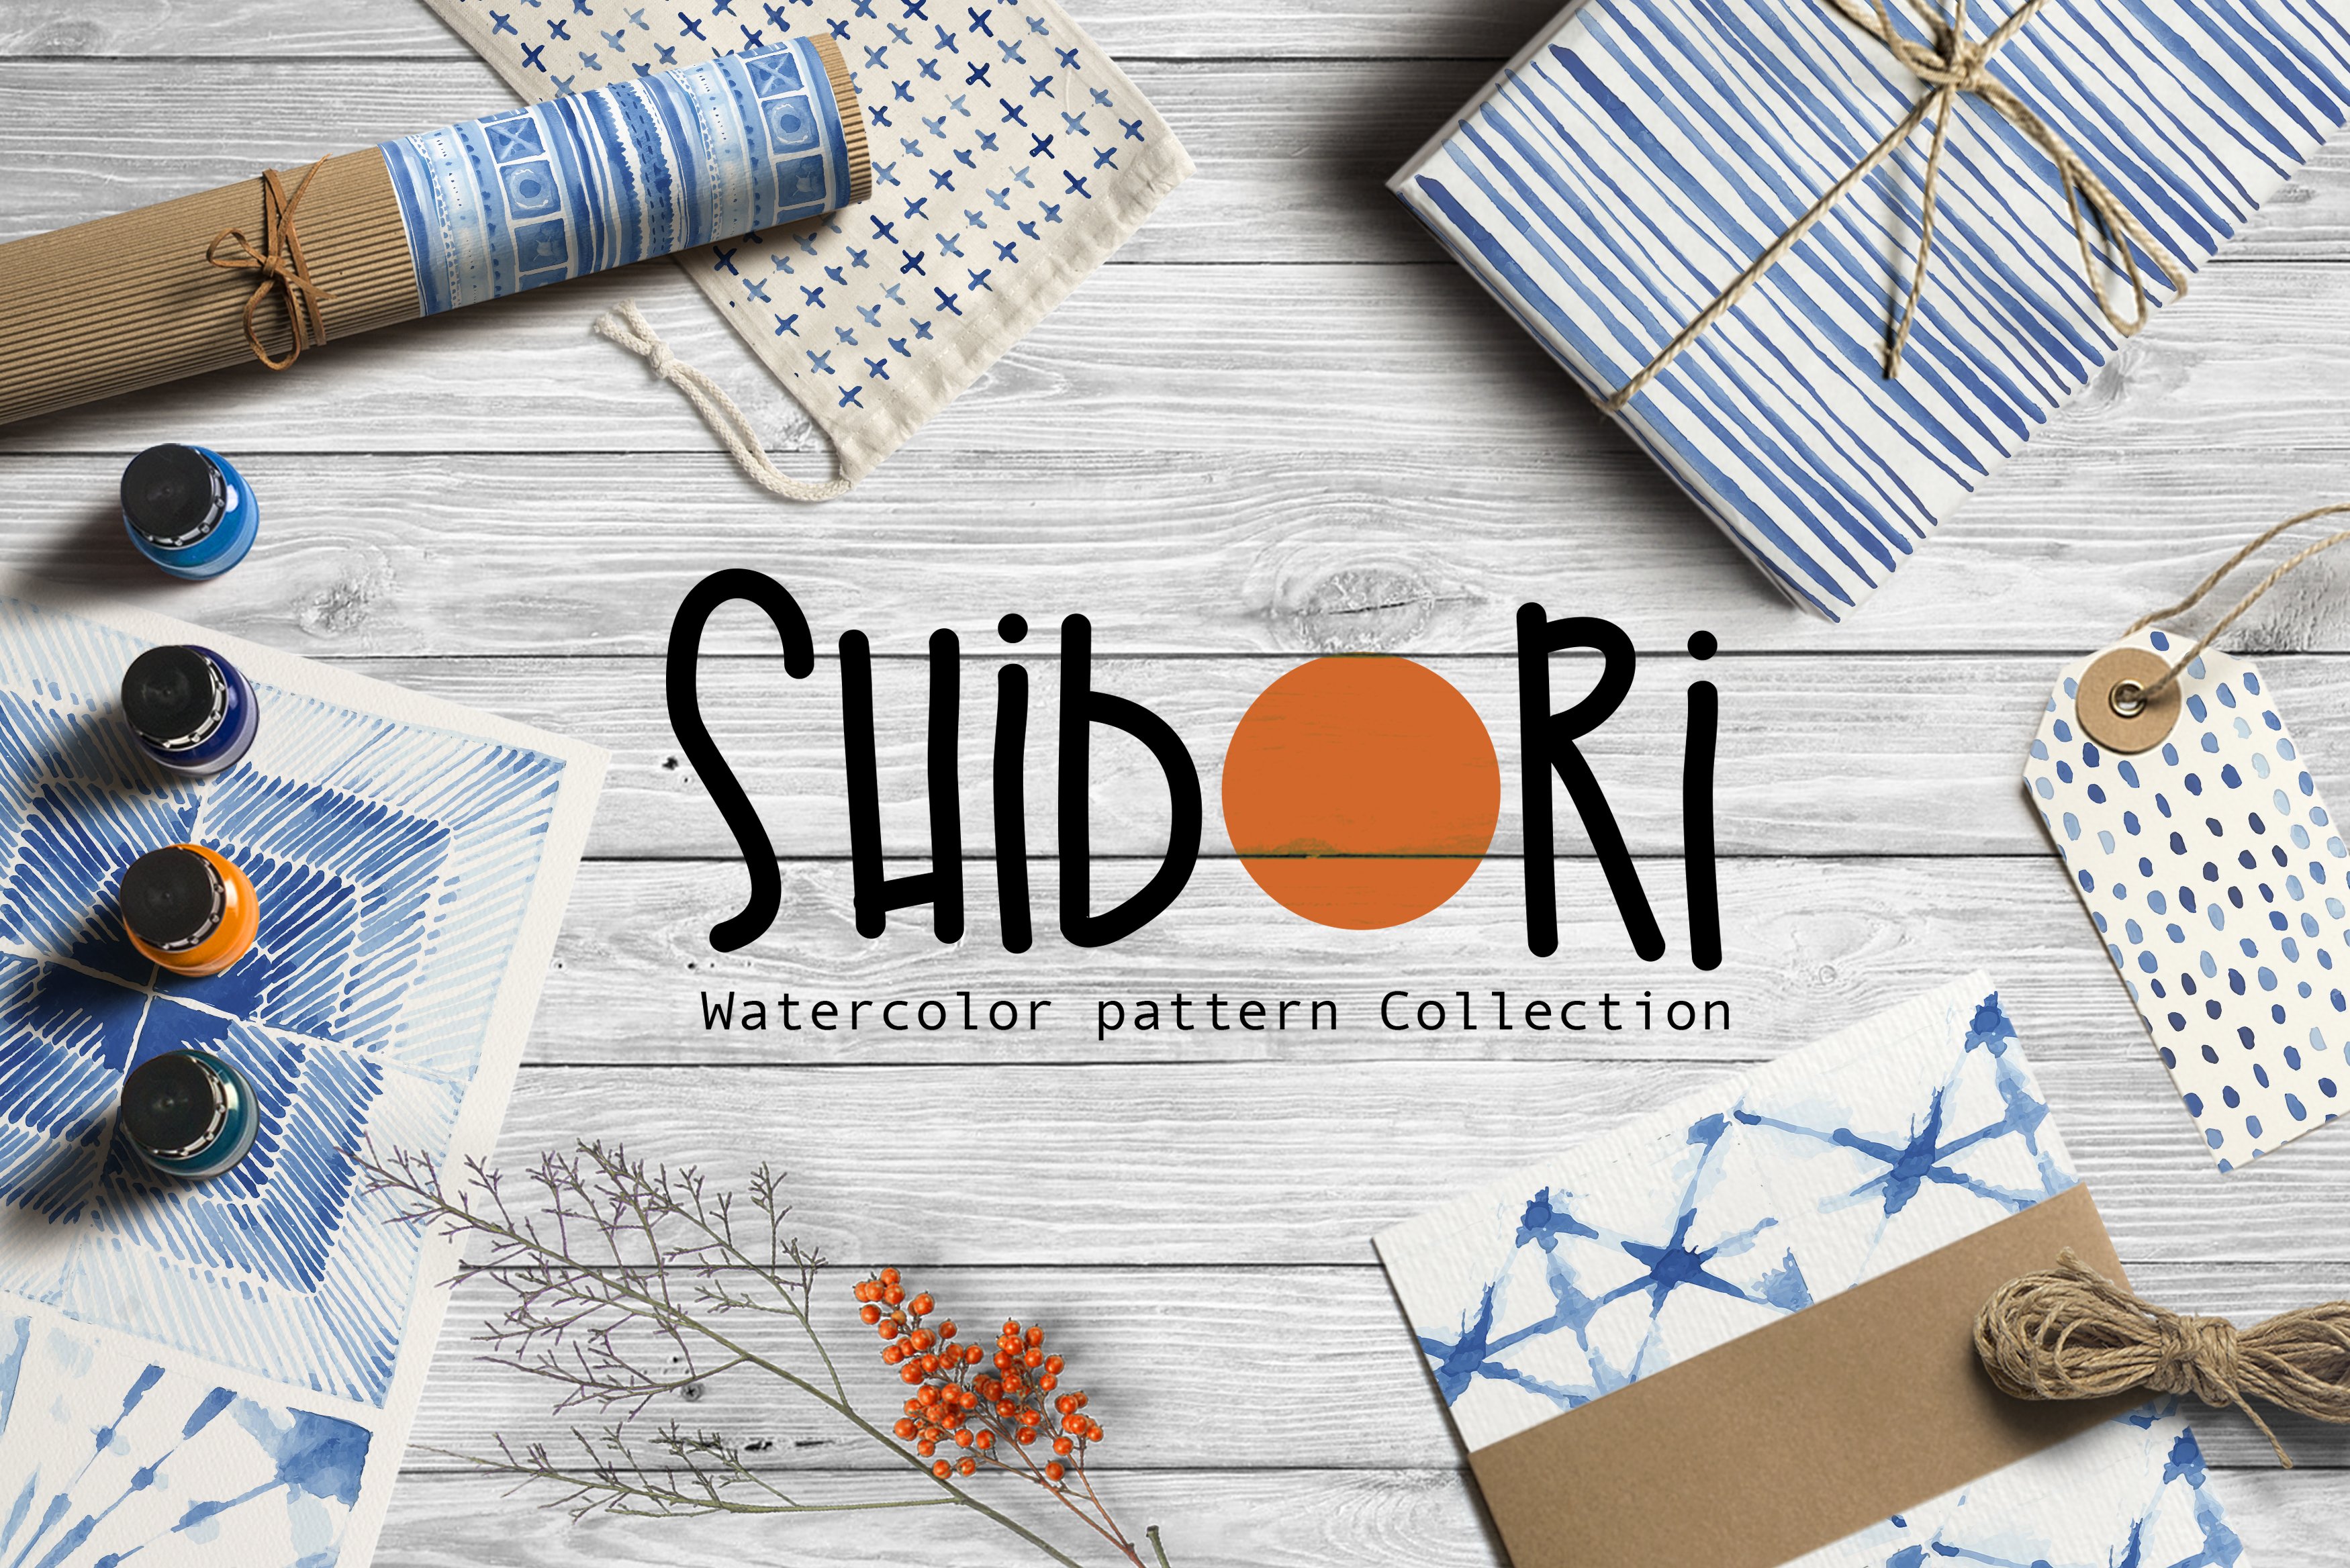 Shibori indigo watercolor collection cover image.